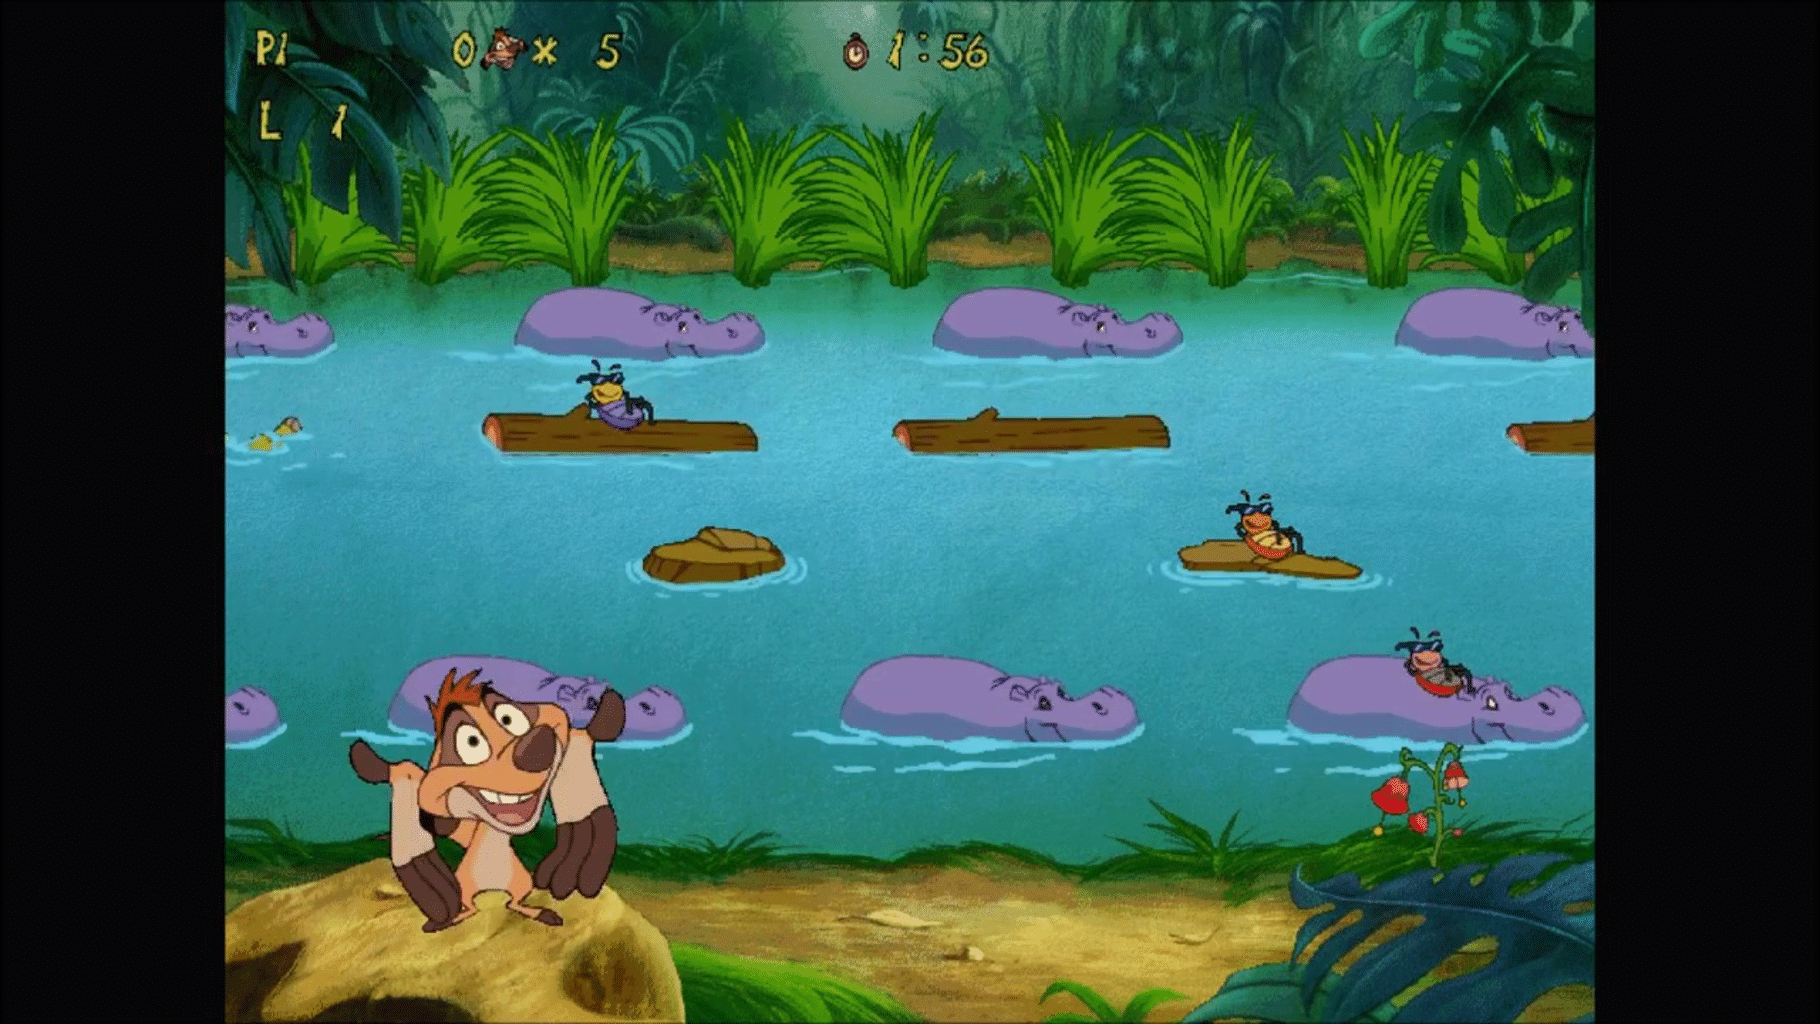 Disney's Timon & Pumbaa's Jungle Games screenshot